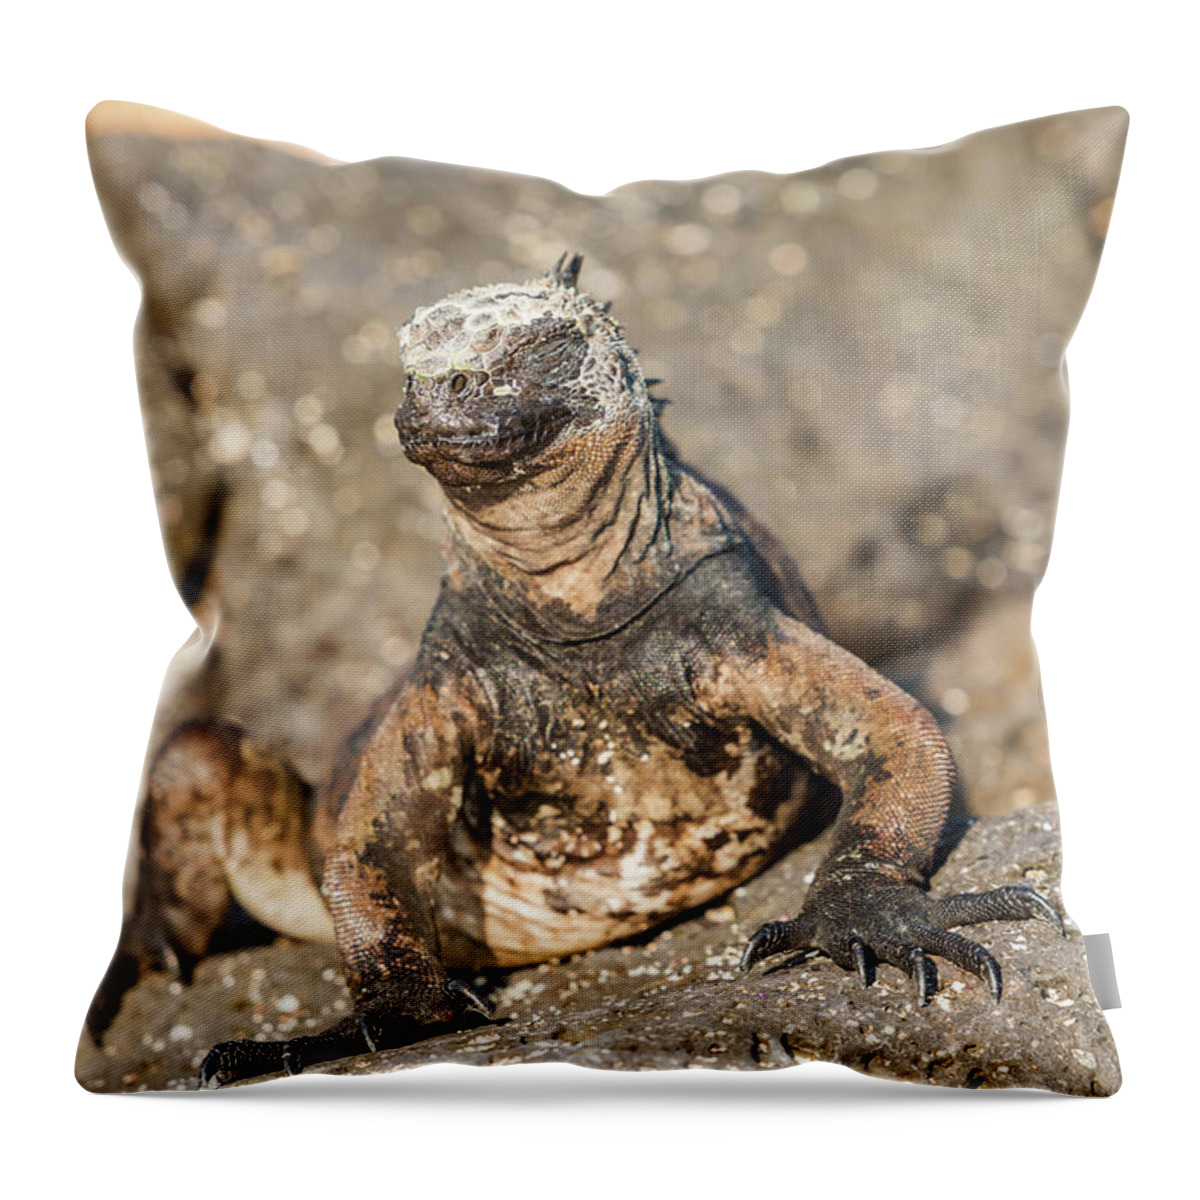 Marine Iguana Throw Pillow featuring the photograph Marine Iguana on Galapagos Islands #18 by Marek Poplawski